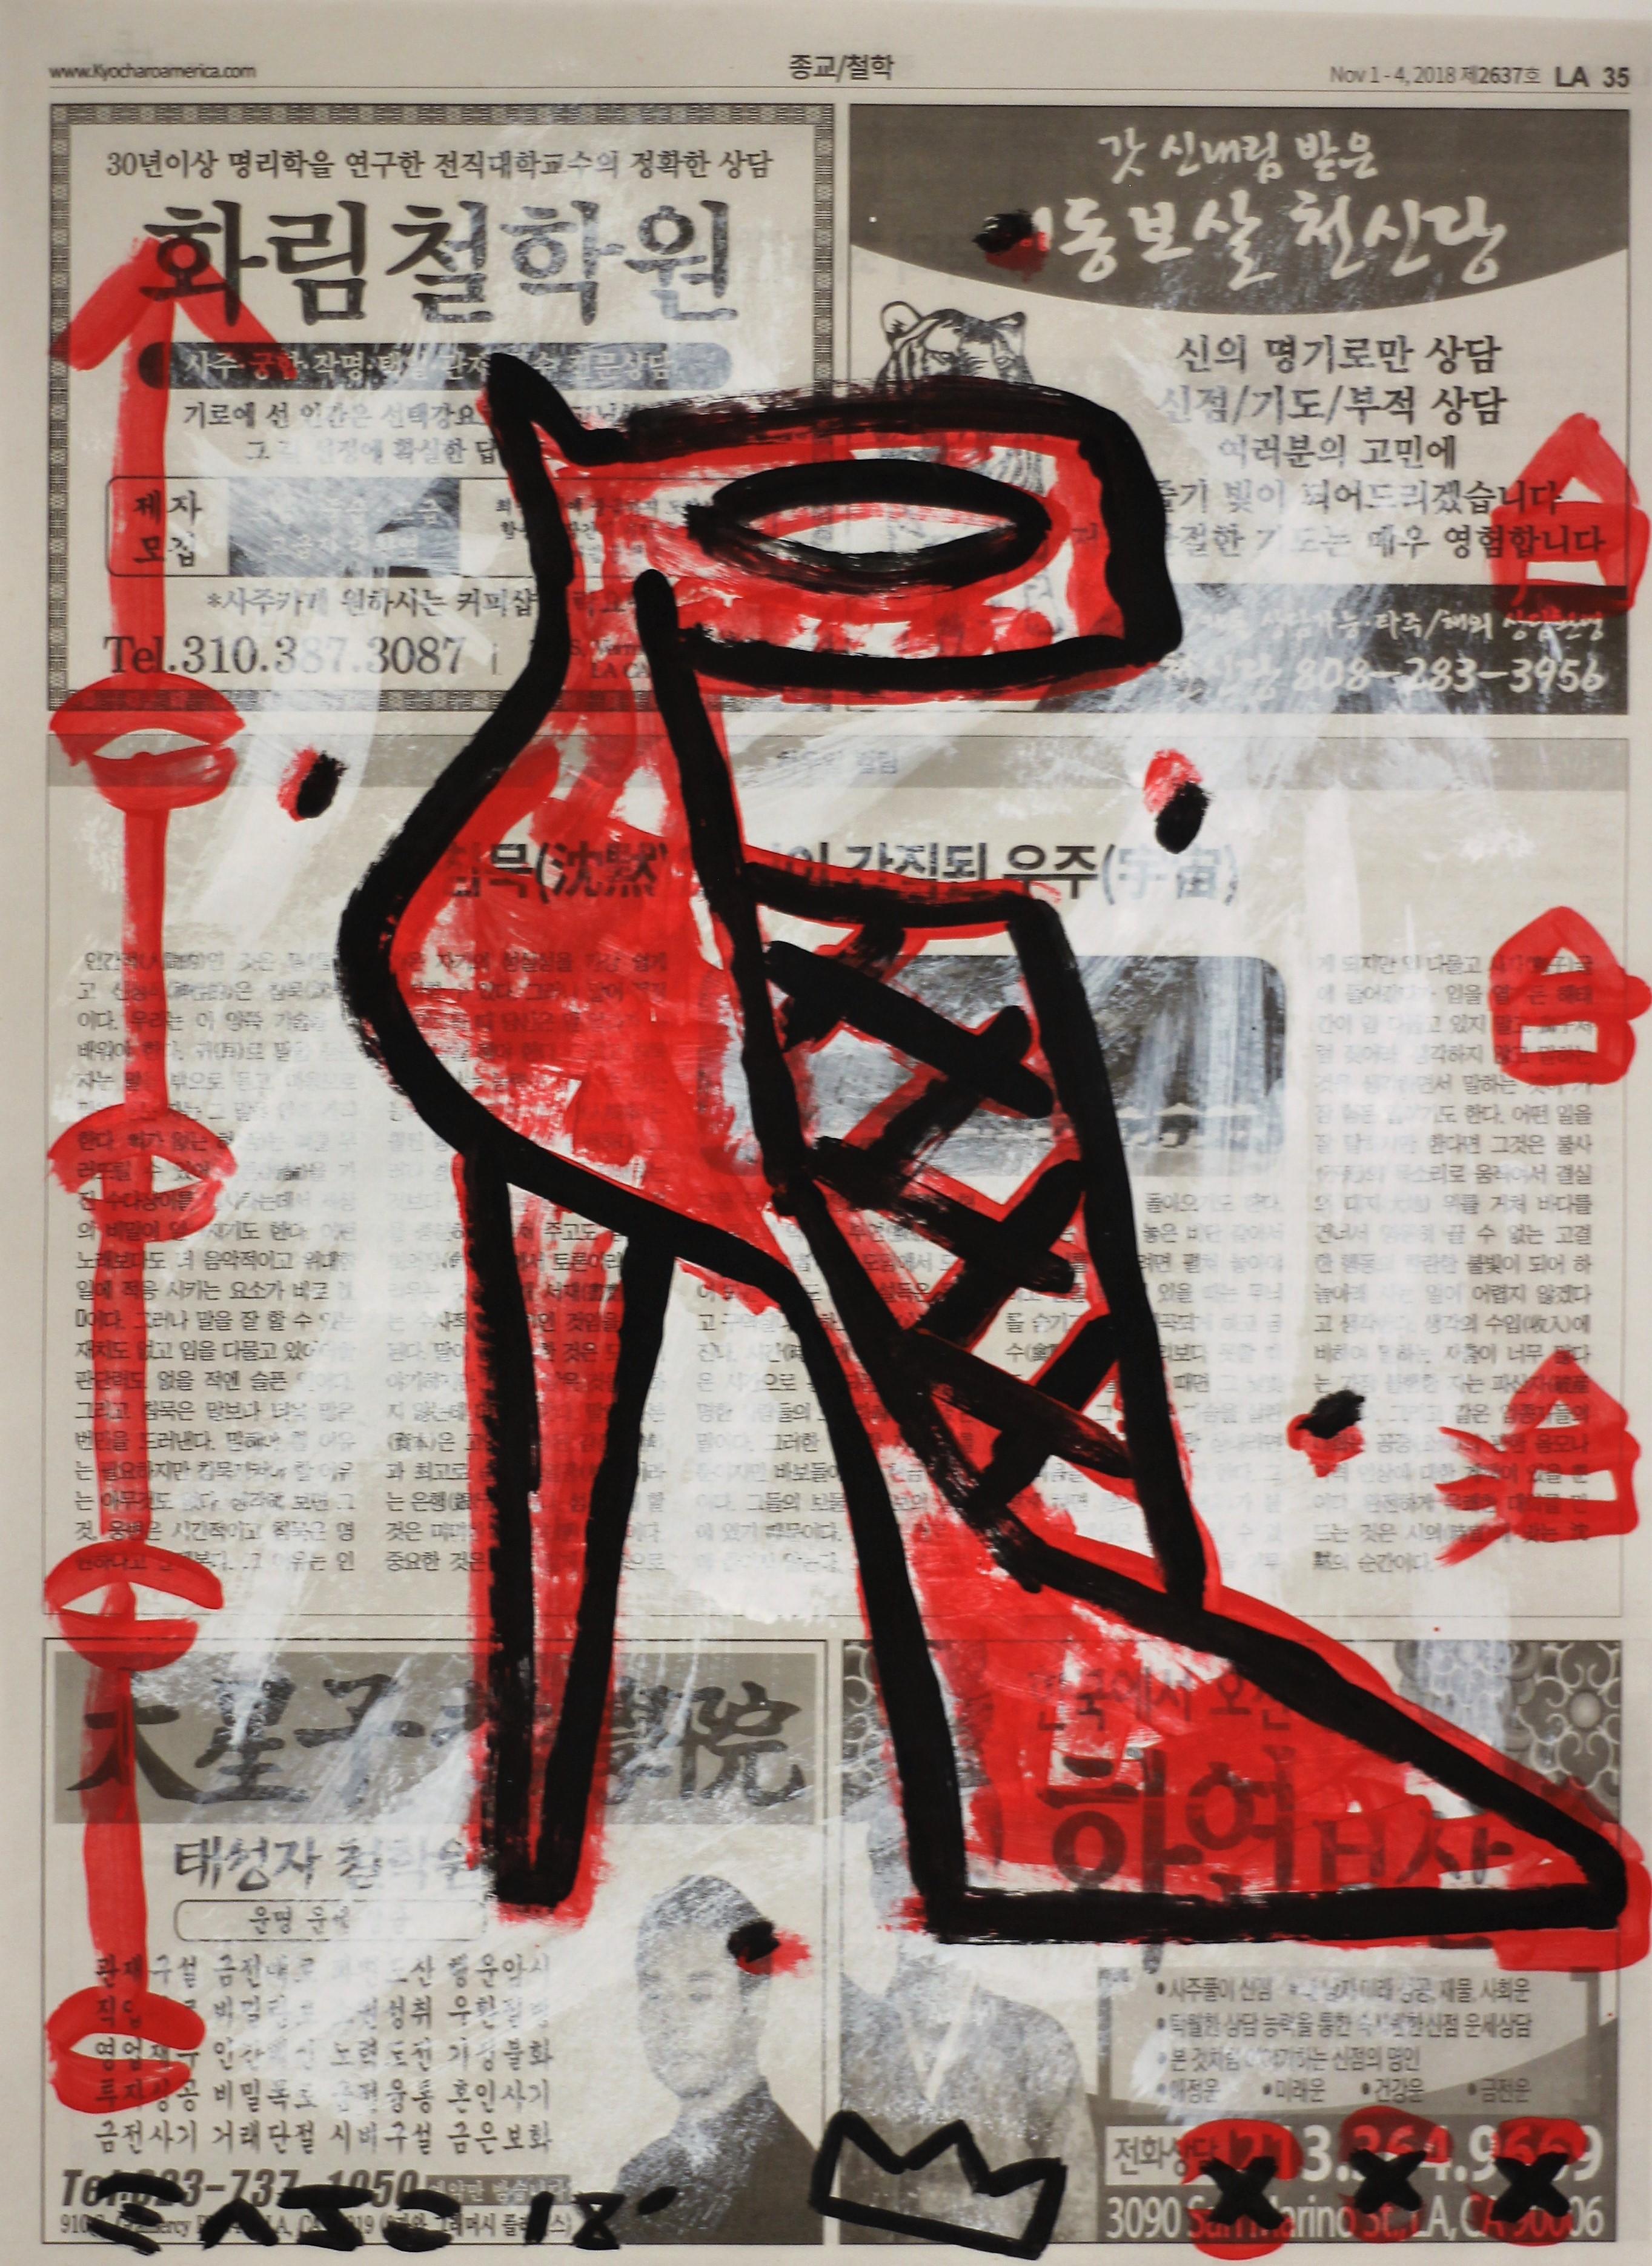 My Dream Shoe - Black and Red Stiletto Original Street Art on Newsprint (Ma chaussure de rêve - Stiletto noir et rouge)